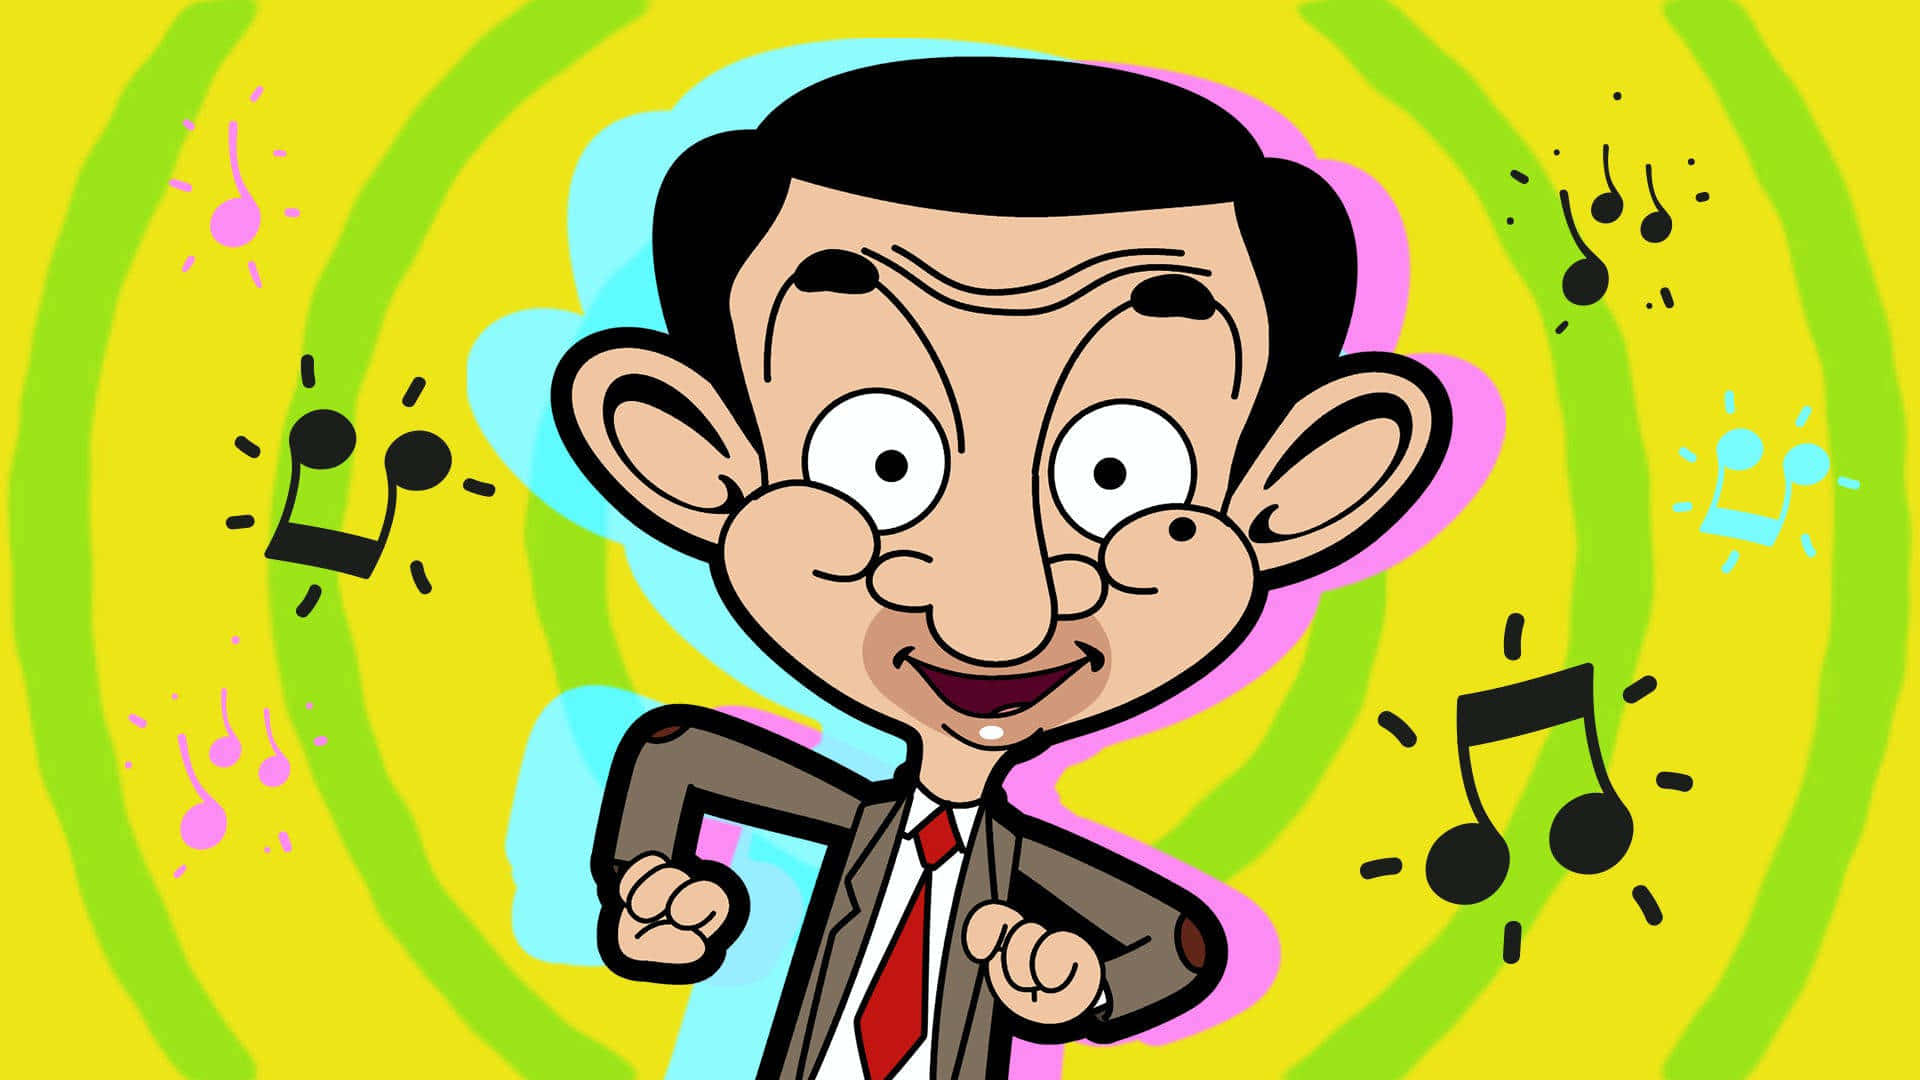 Mr. Bean's Hilarious Adventure in his Green Mini Cooper